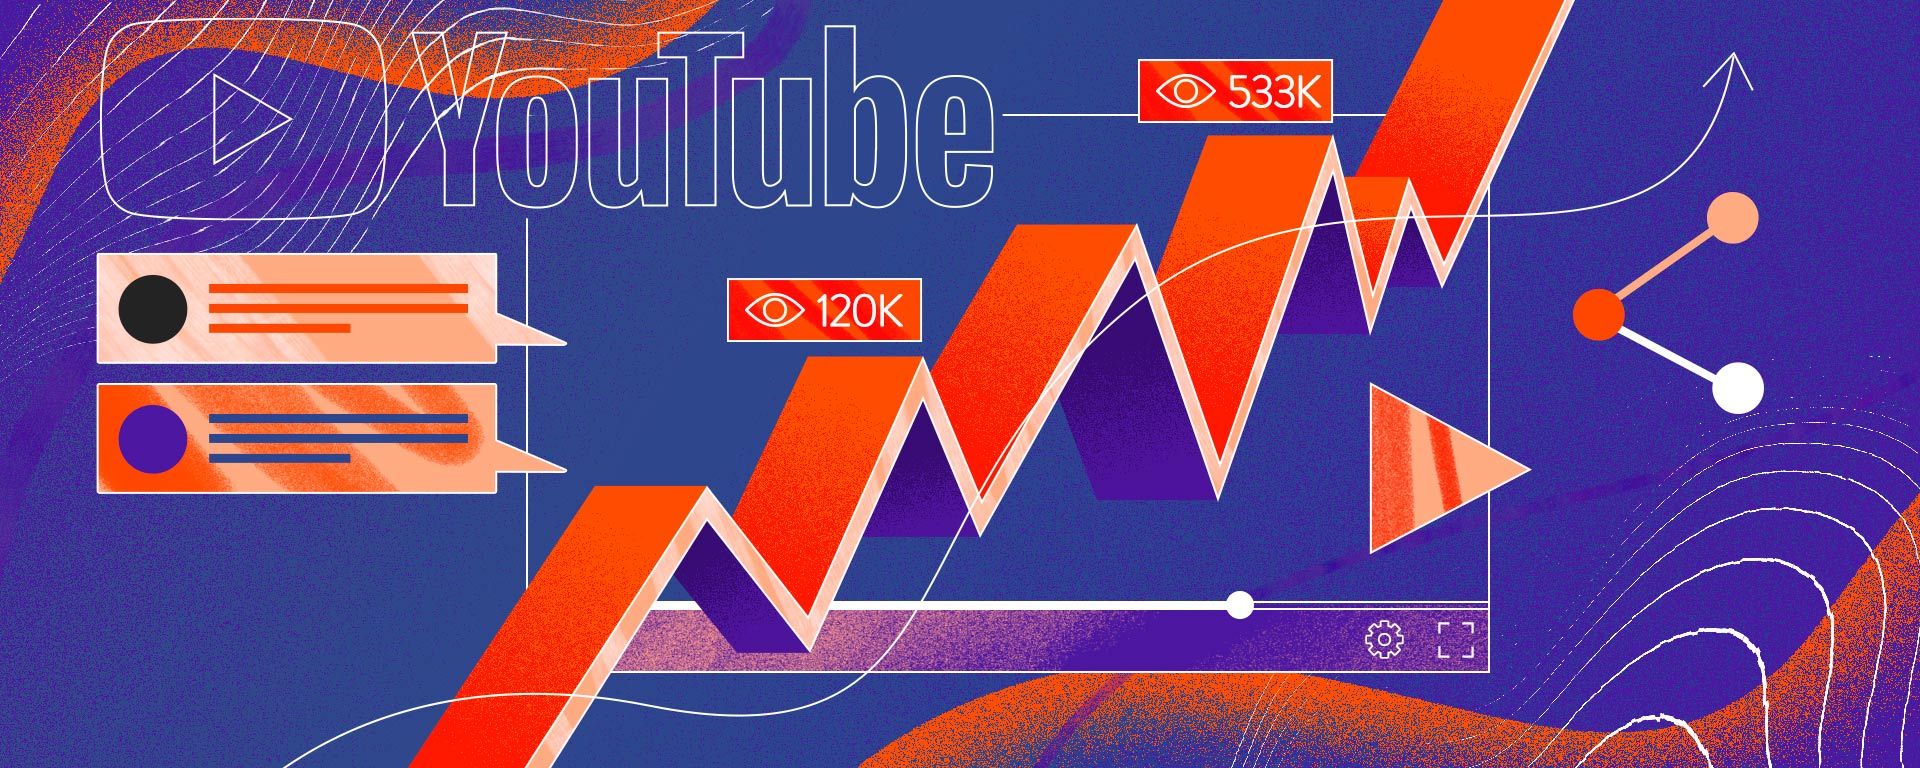 Illustration of YouTube Analytics.